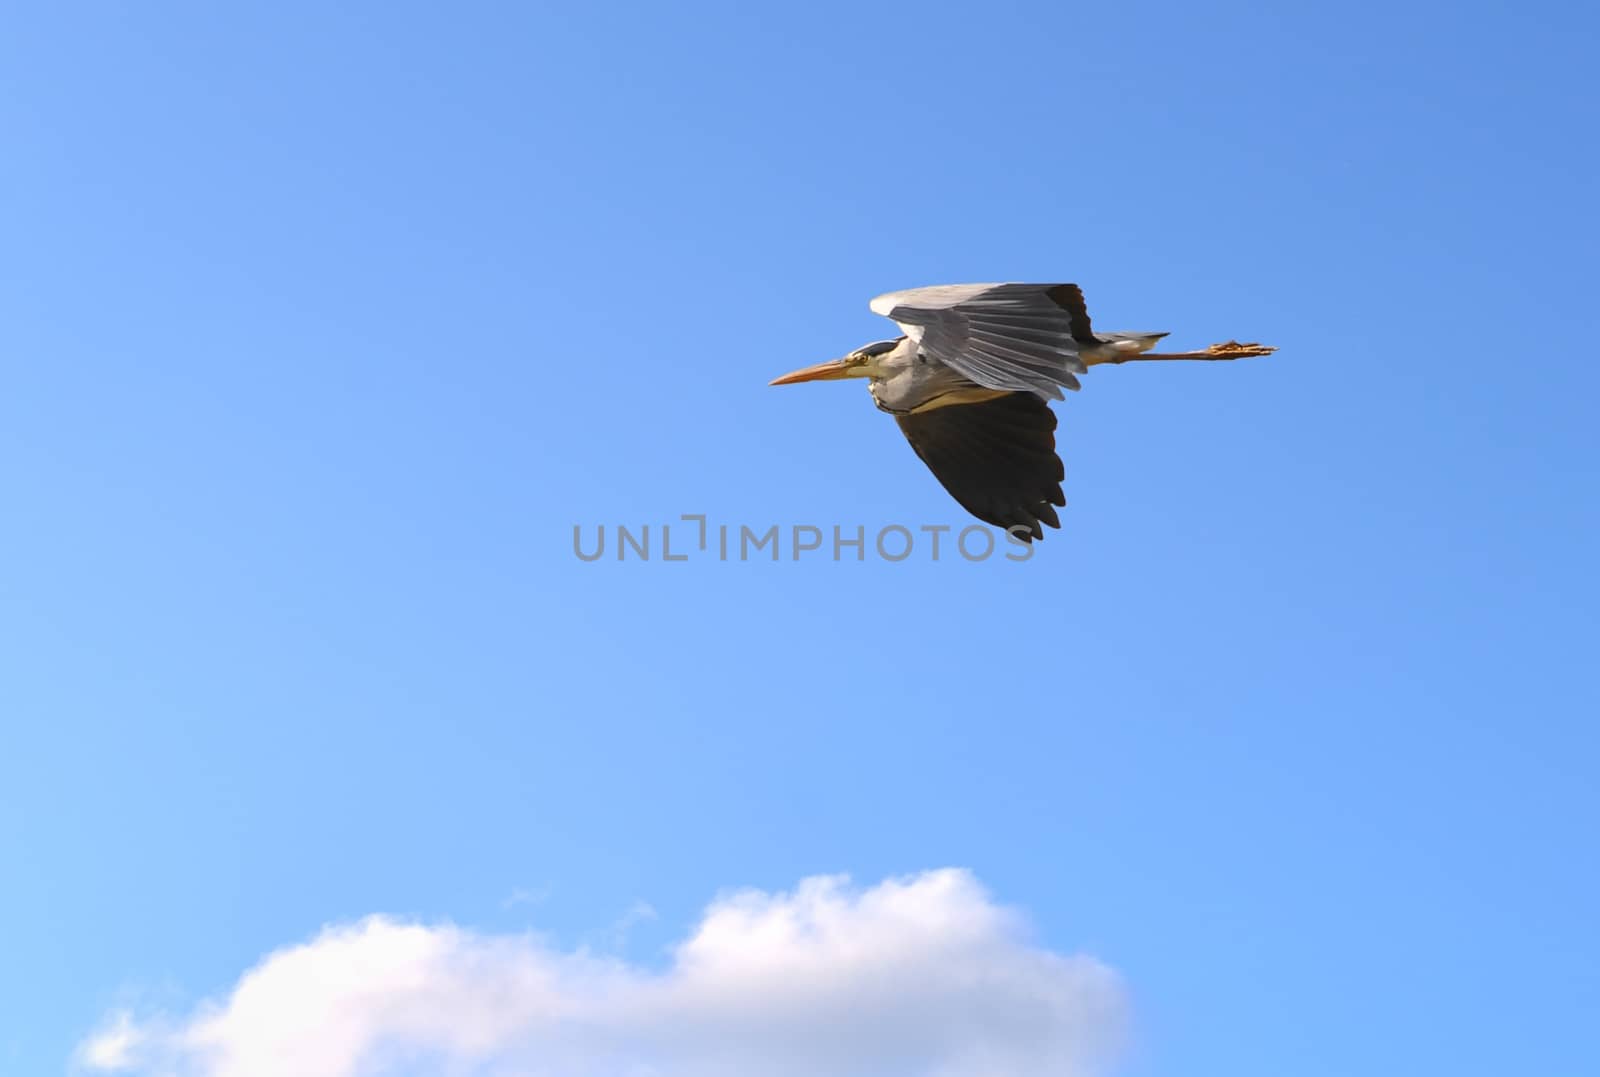 A gray heron in flight just before landing